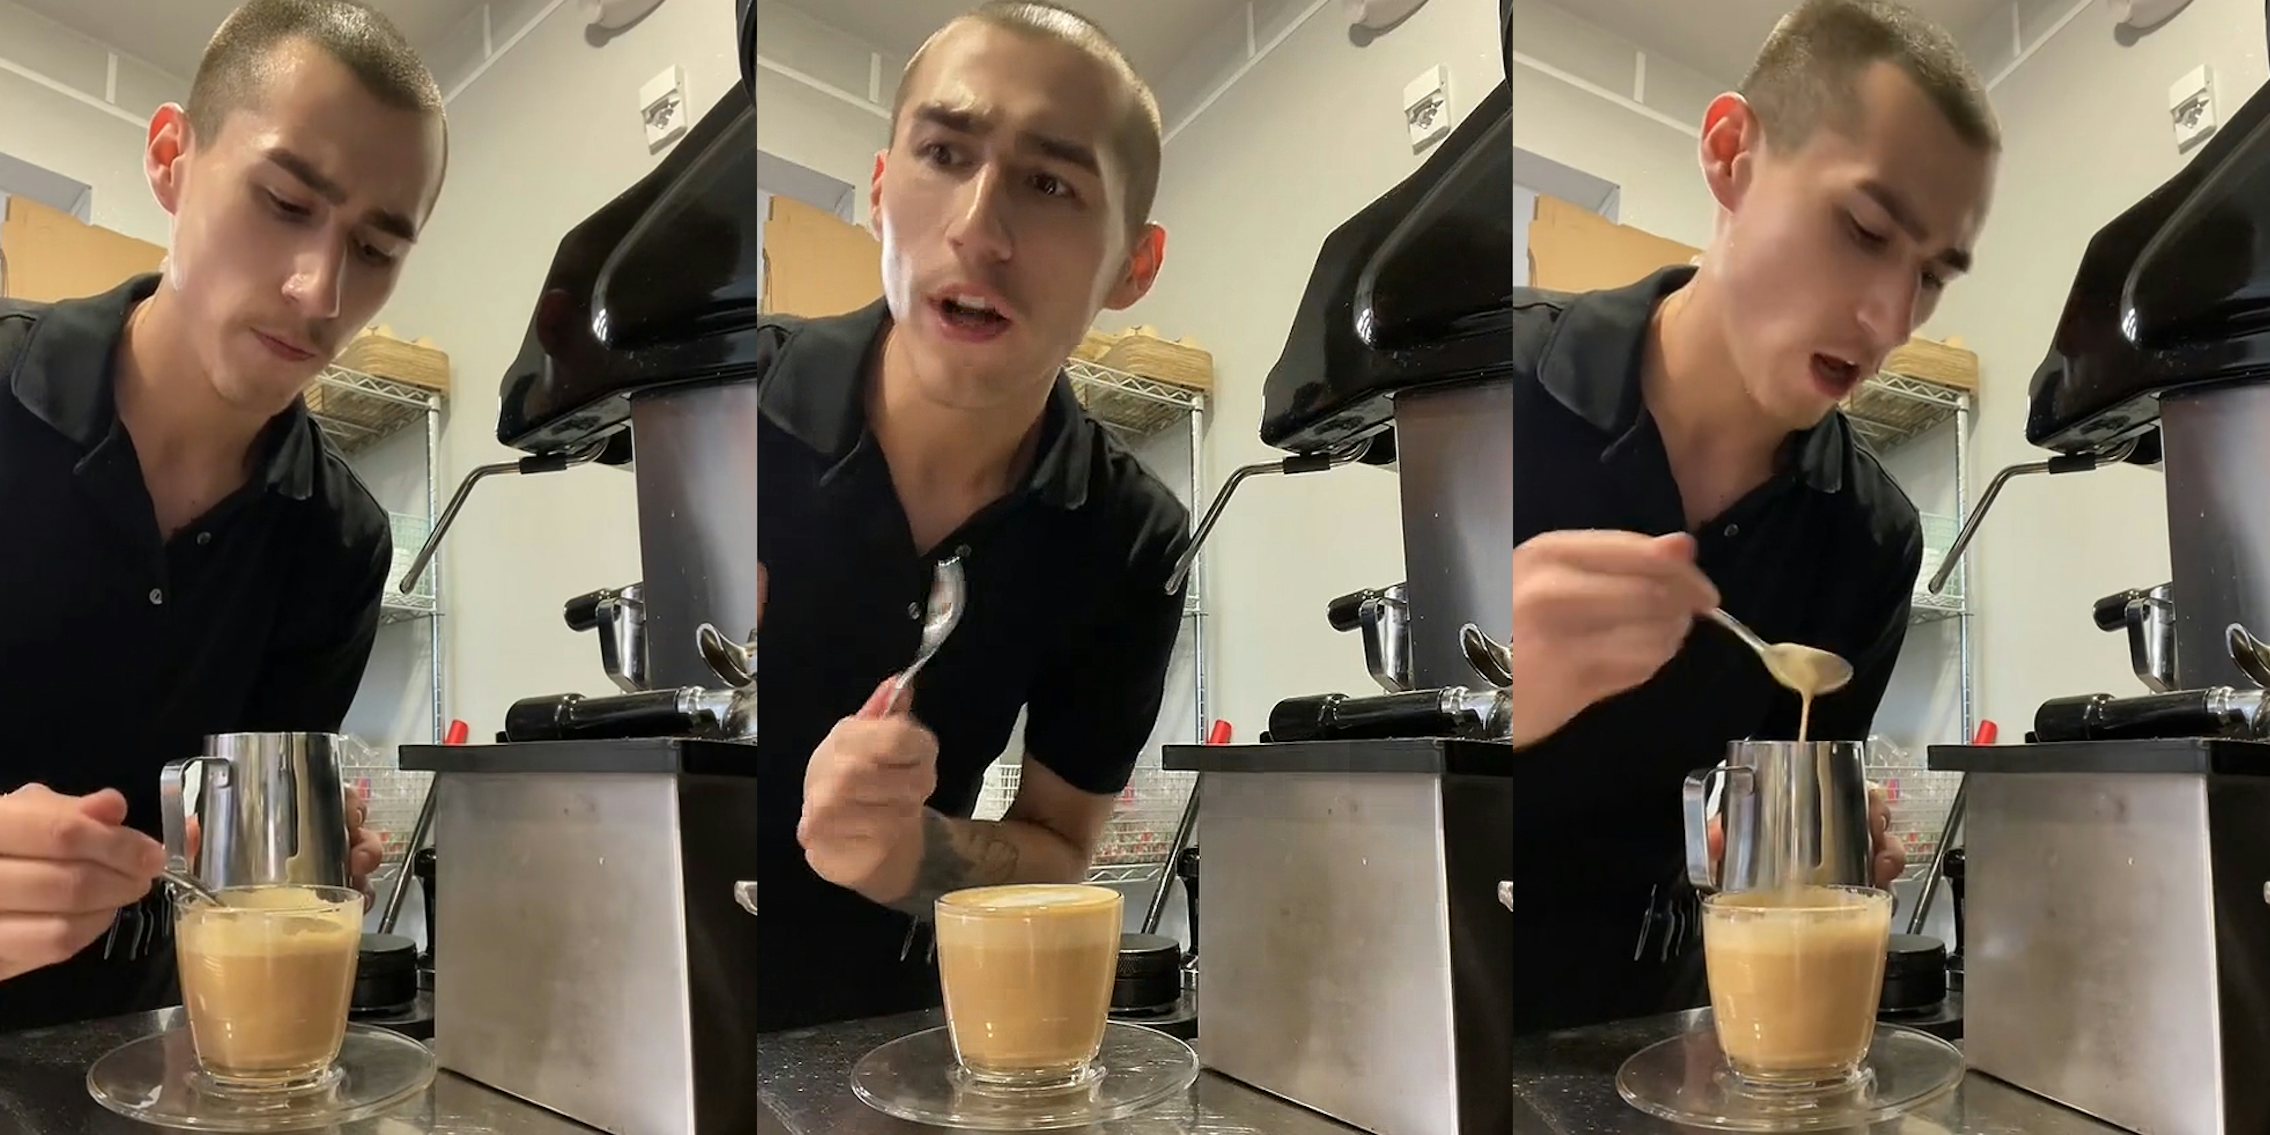 Starbucks barista scooping roam out of latte (l) Starbucks barista speaking holding spoon next to latte (c) Starbucks barista scooping foam out of latte (r)